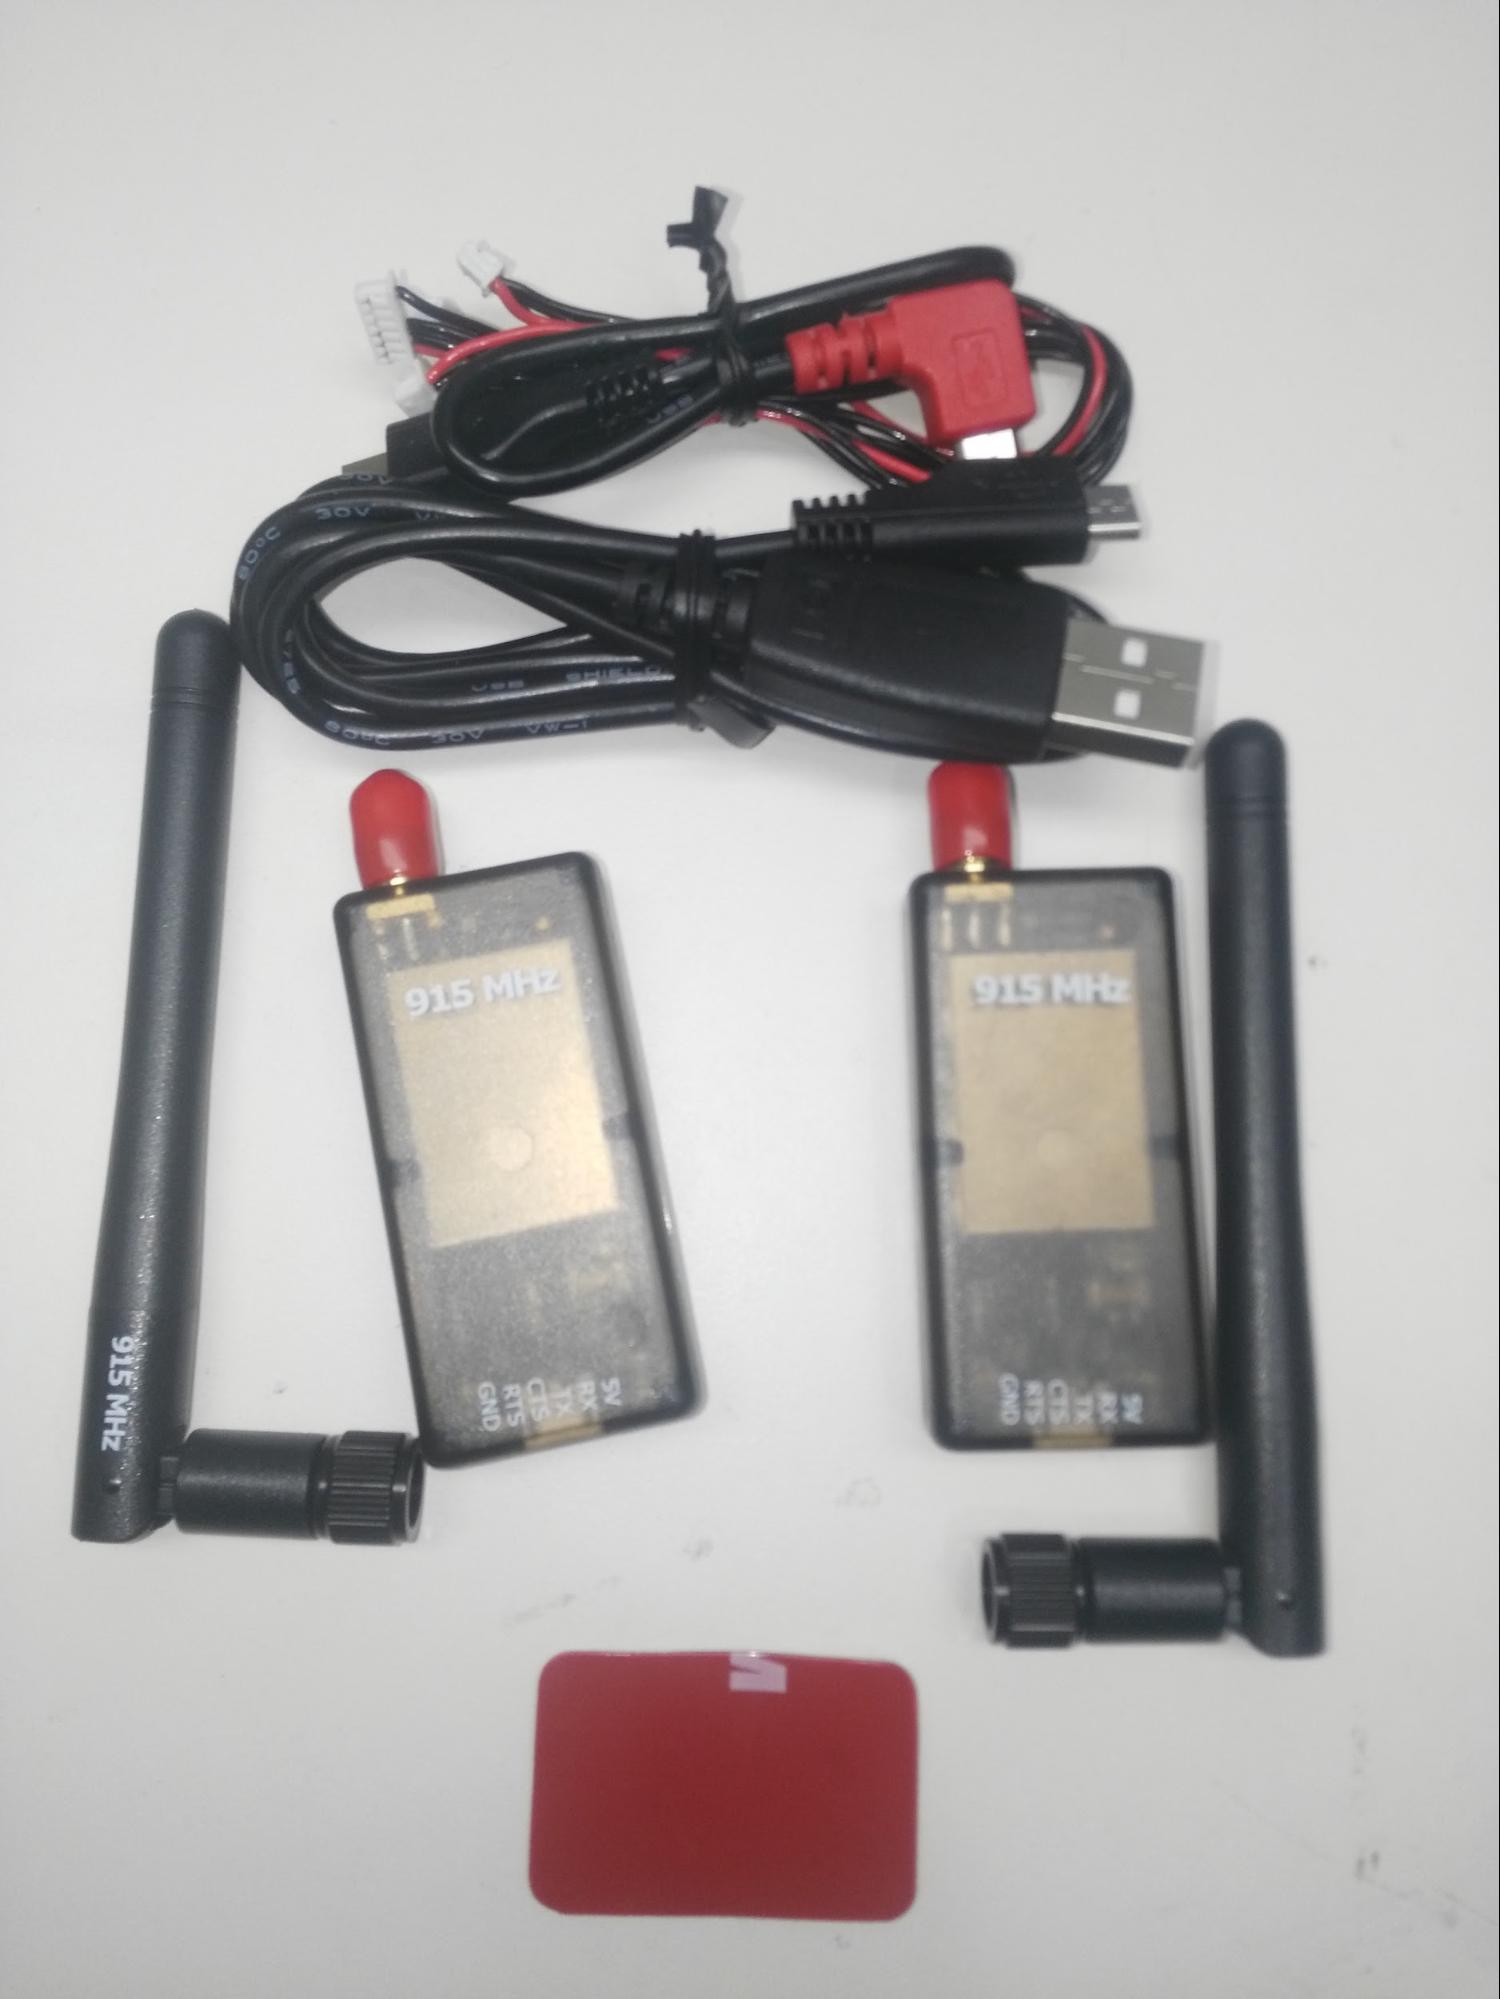 3DR Telemetry Radio Kit - unboxed